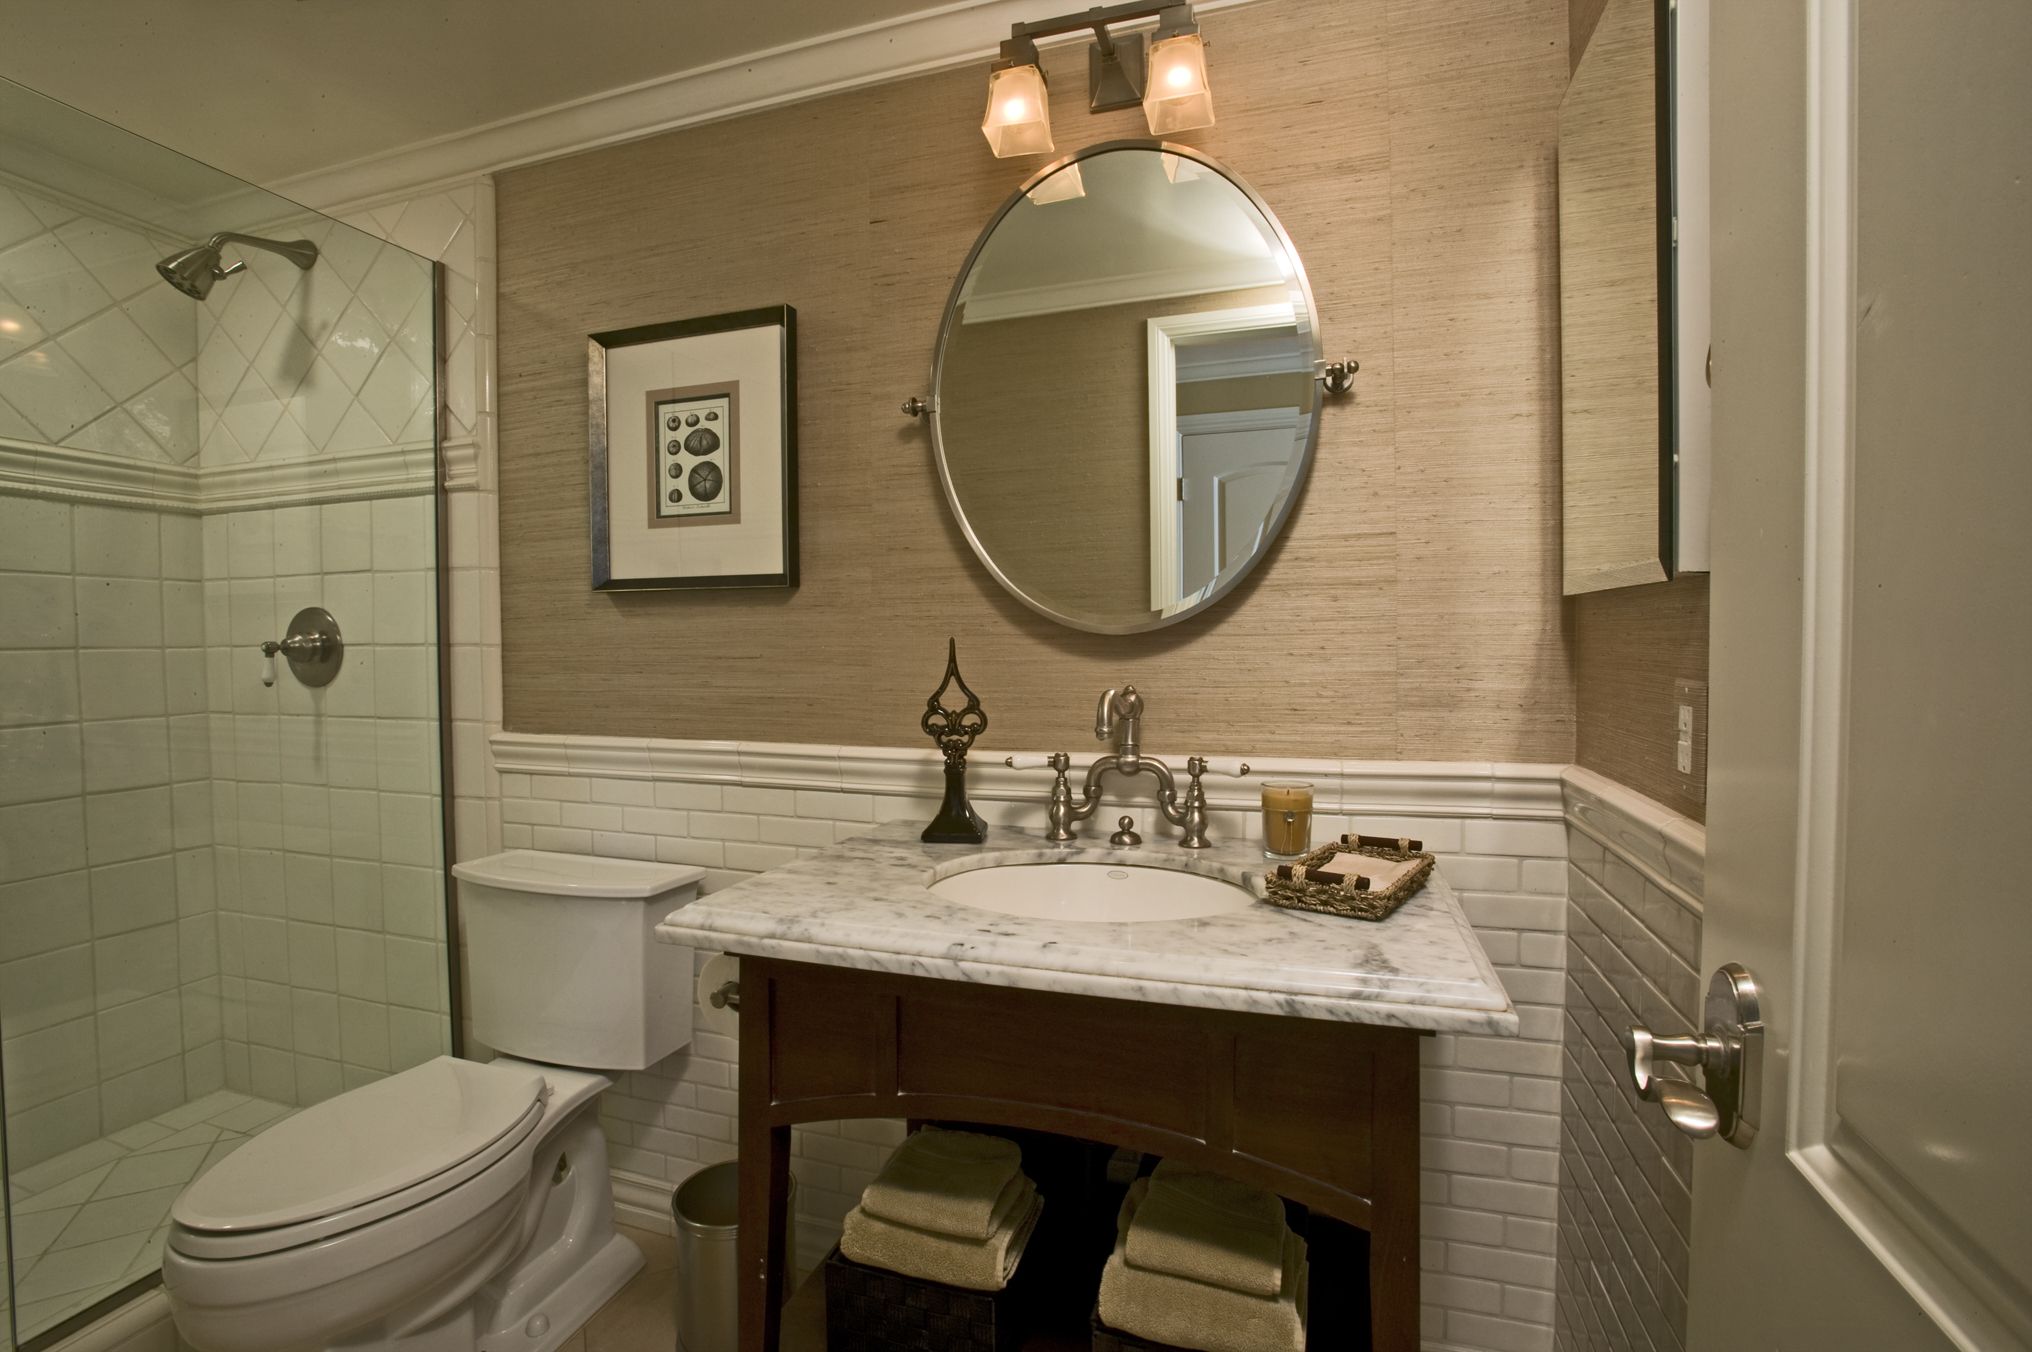 Seagrass Wallpaper In Bathroom - Tile Behind Vanity And Toilet - HD Wallpaper 